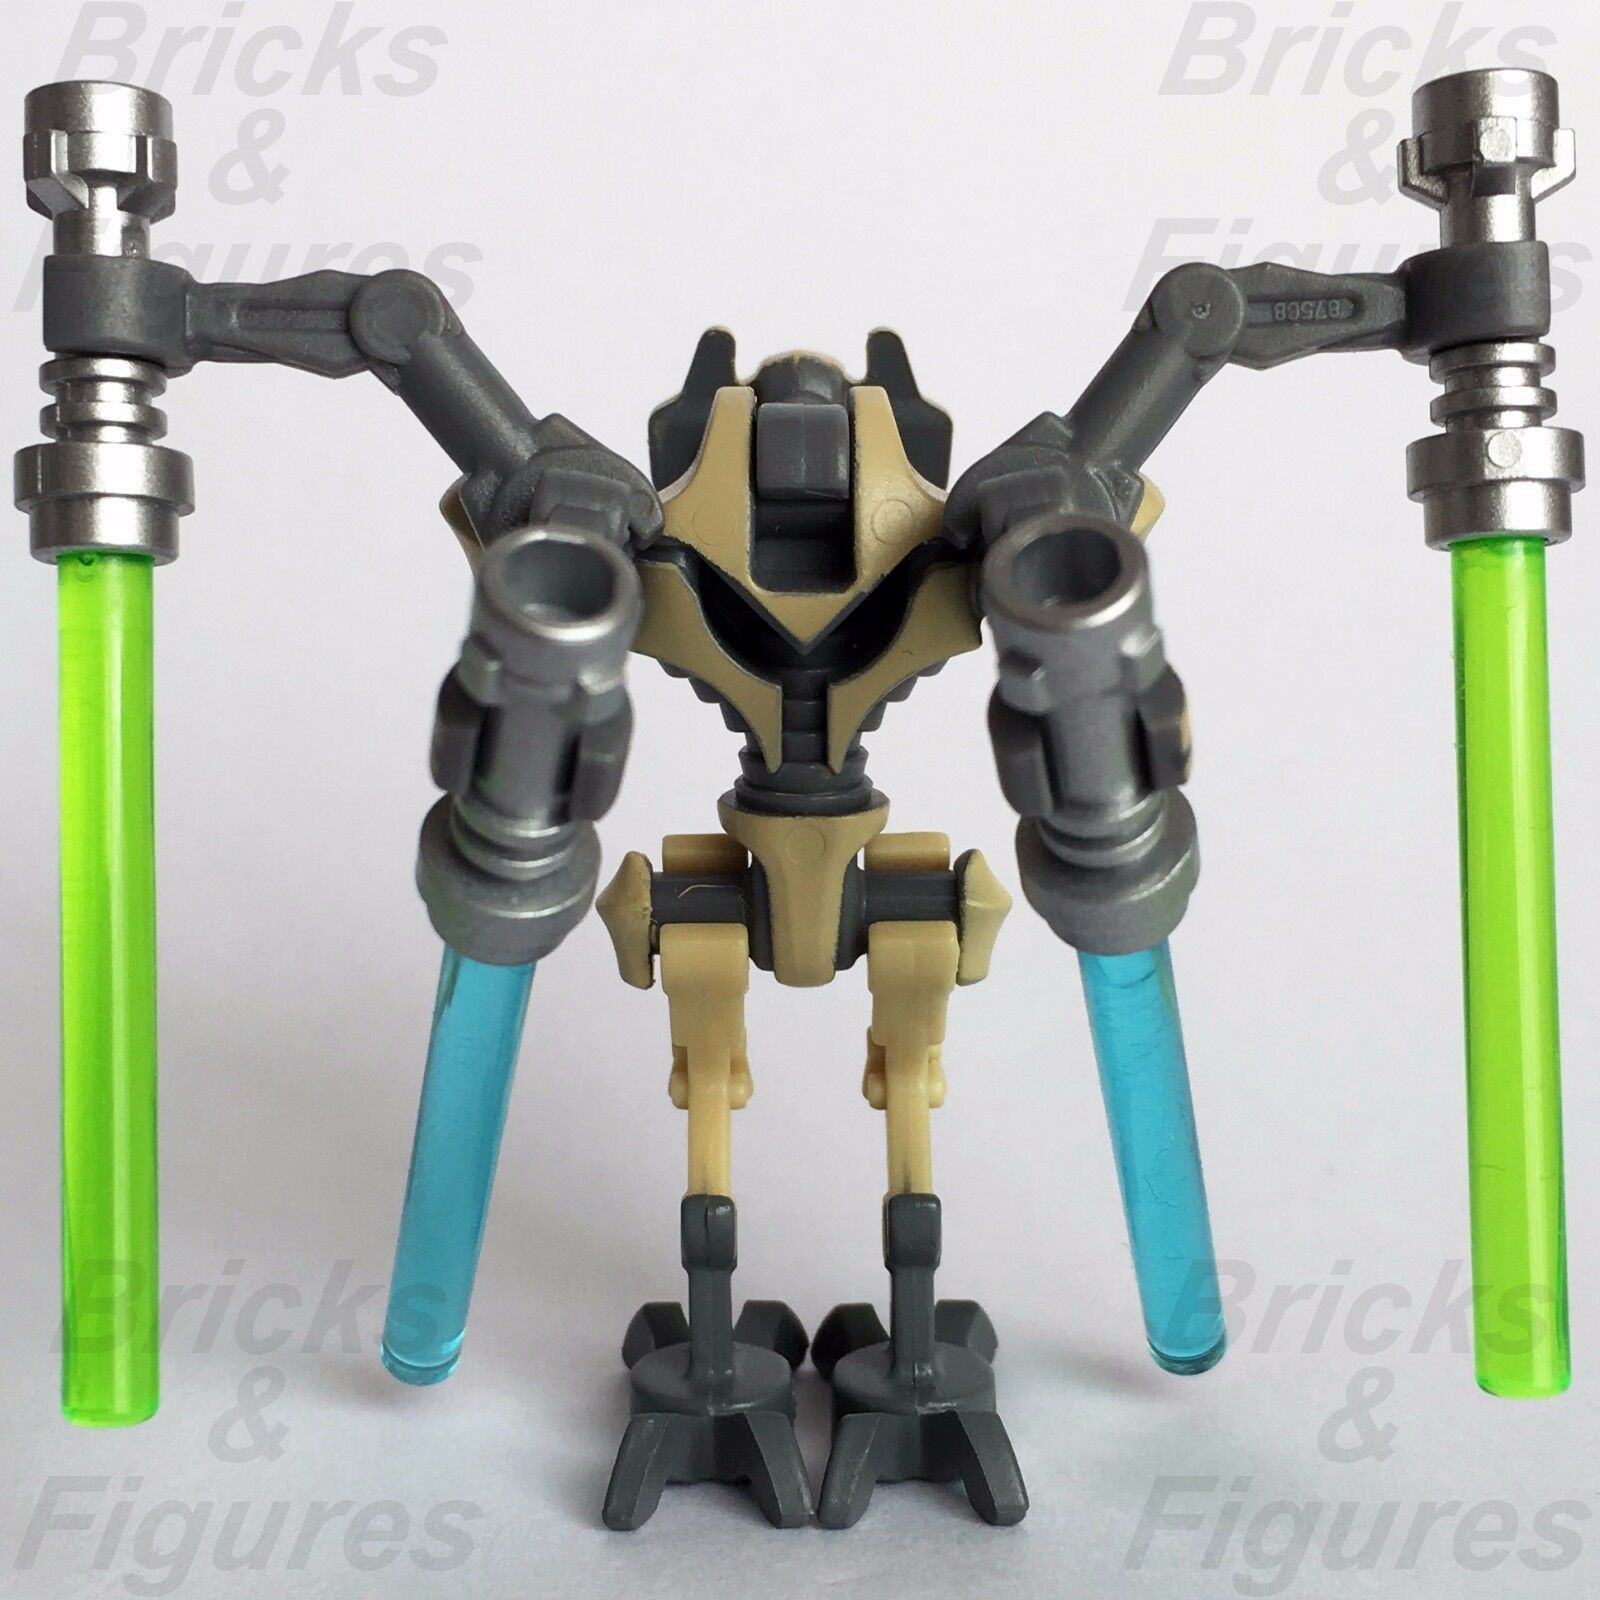 New Star Wars LEGO General Grievous Cyborg Separatist Minifigure 8095 9515 - Bricks & Figures